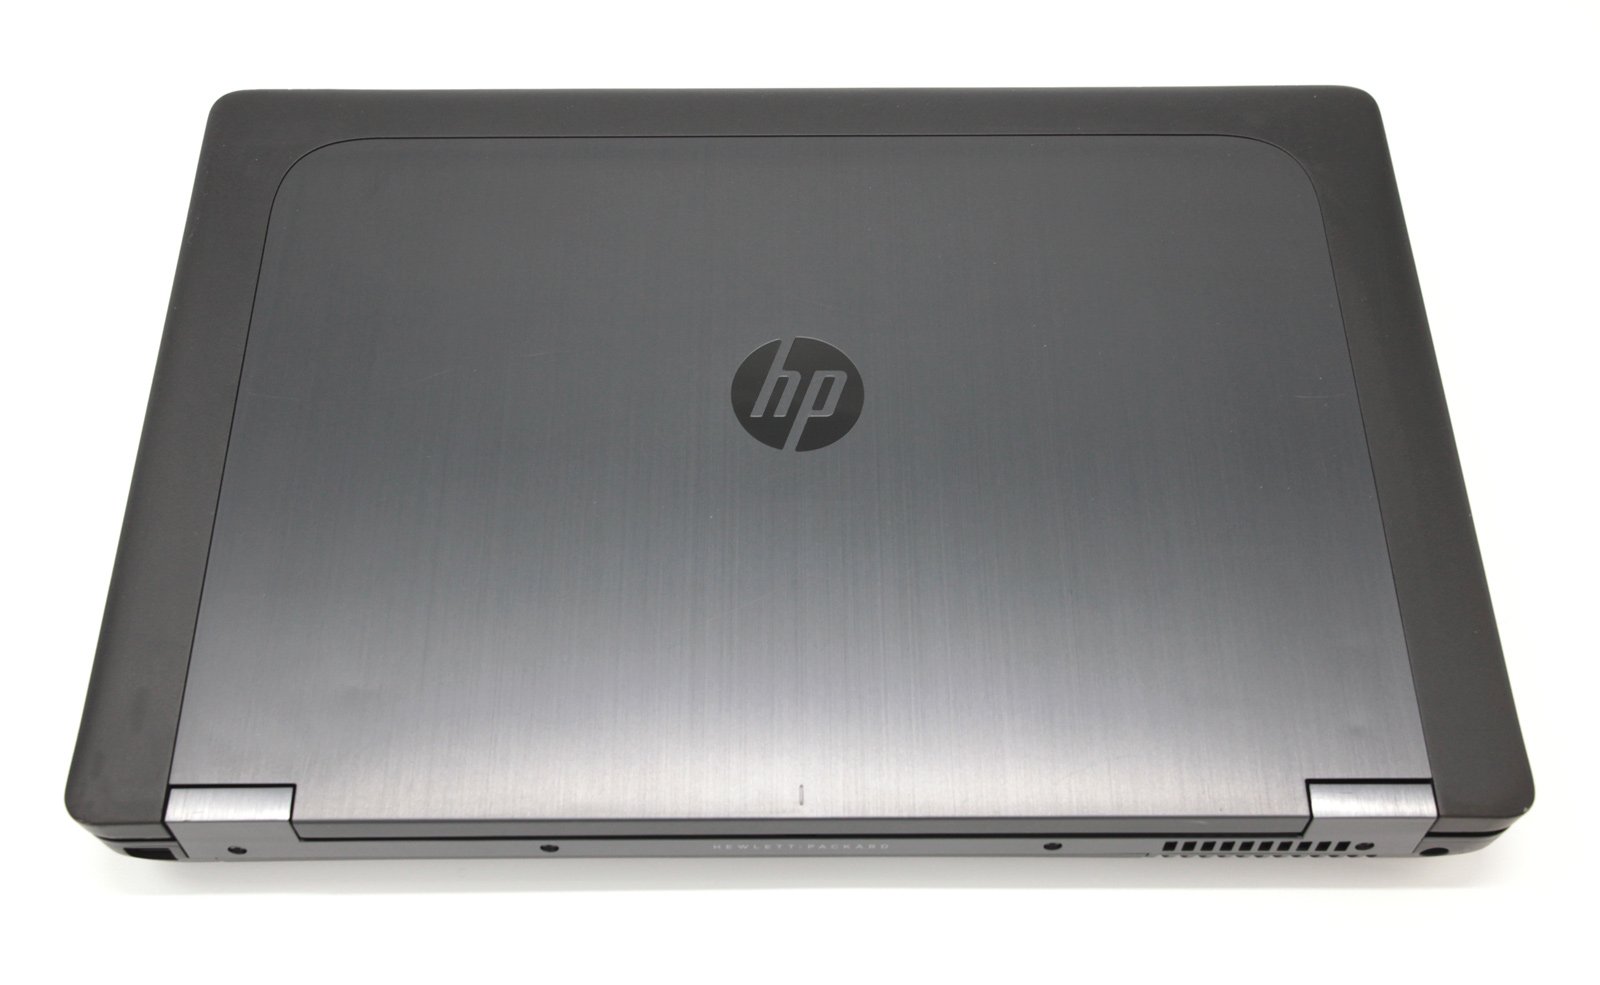 HP ZBook 17 CAD Laptop: Core i7-4800MQ, 16GB RAM, 256GB+HDD, Quadro K4100M - CruiseTech